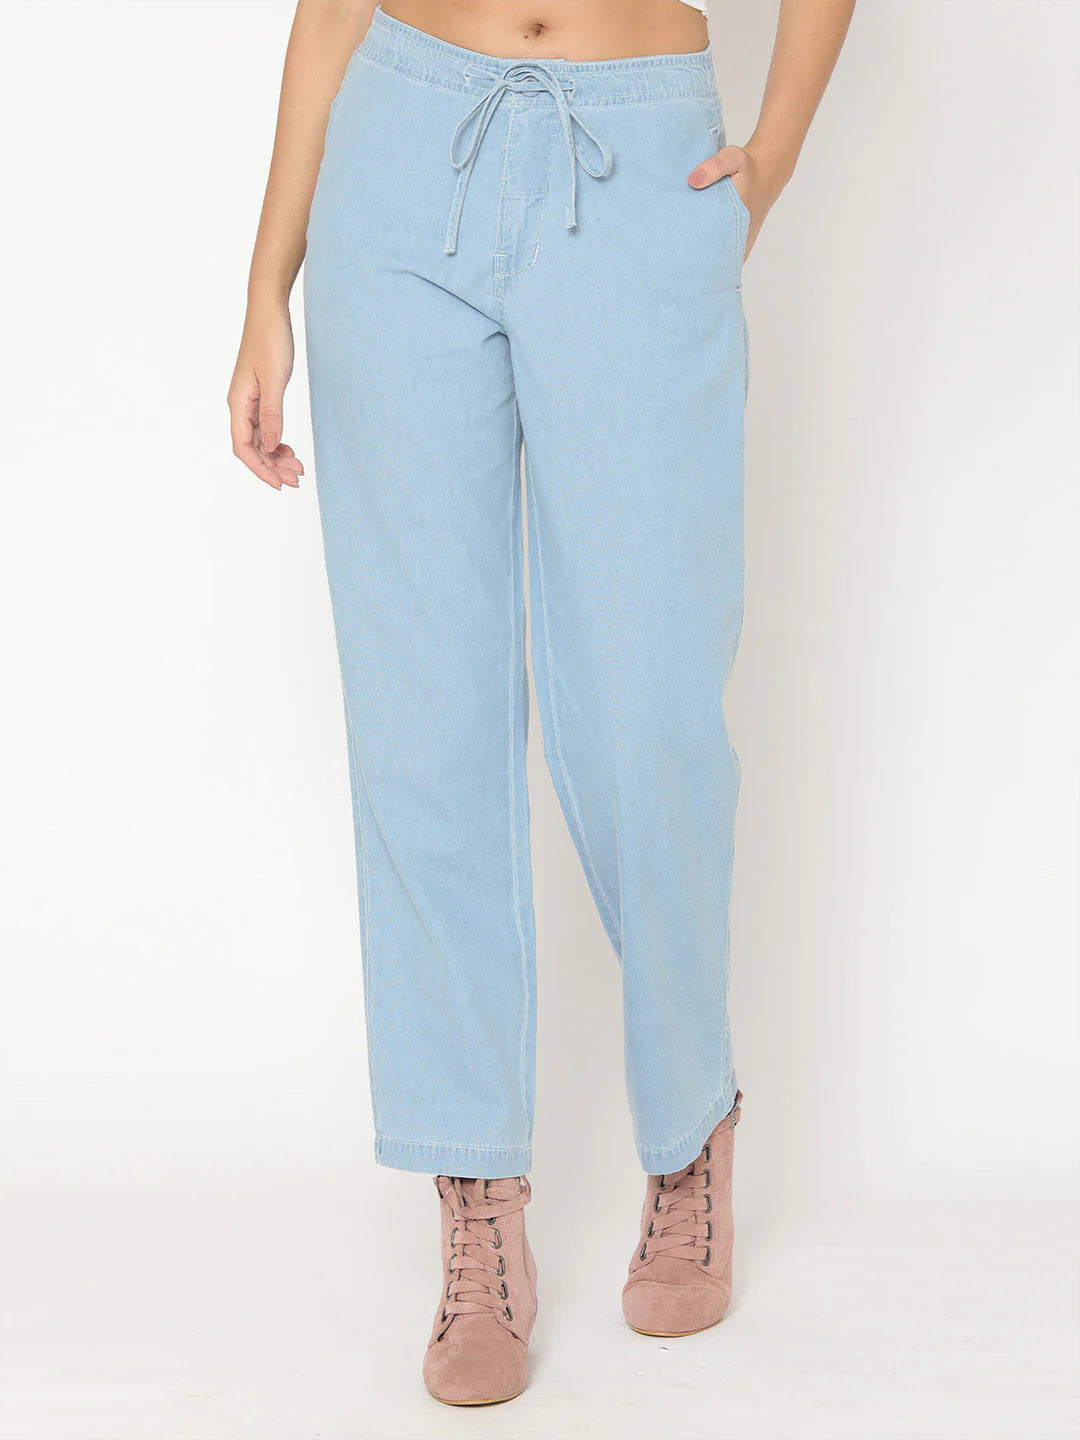 Denim Jeans for Women | Casual Comfort Denim Jeans